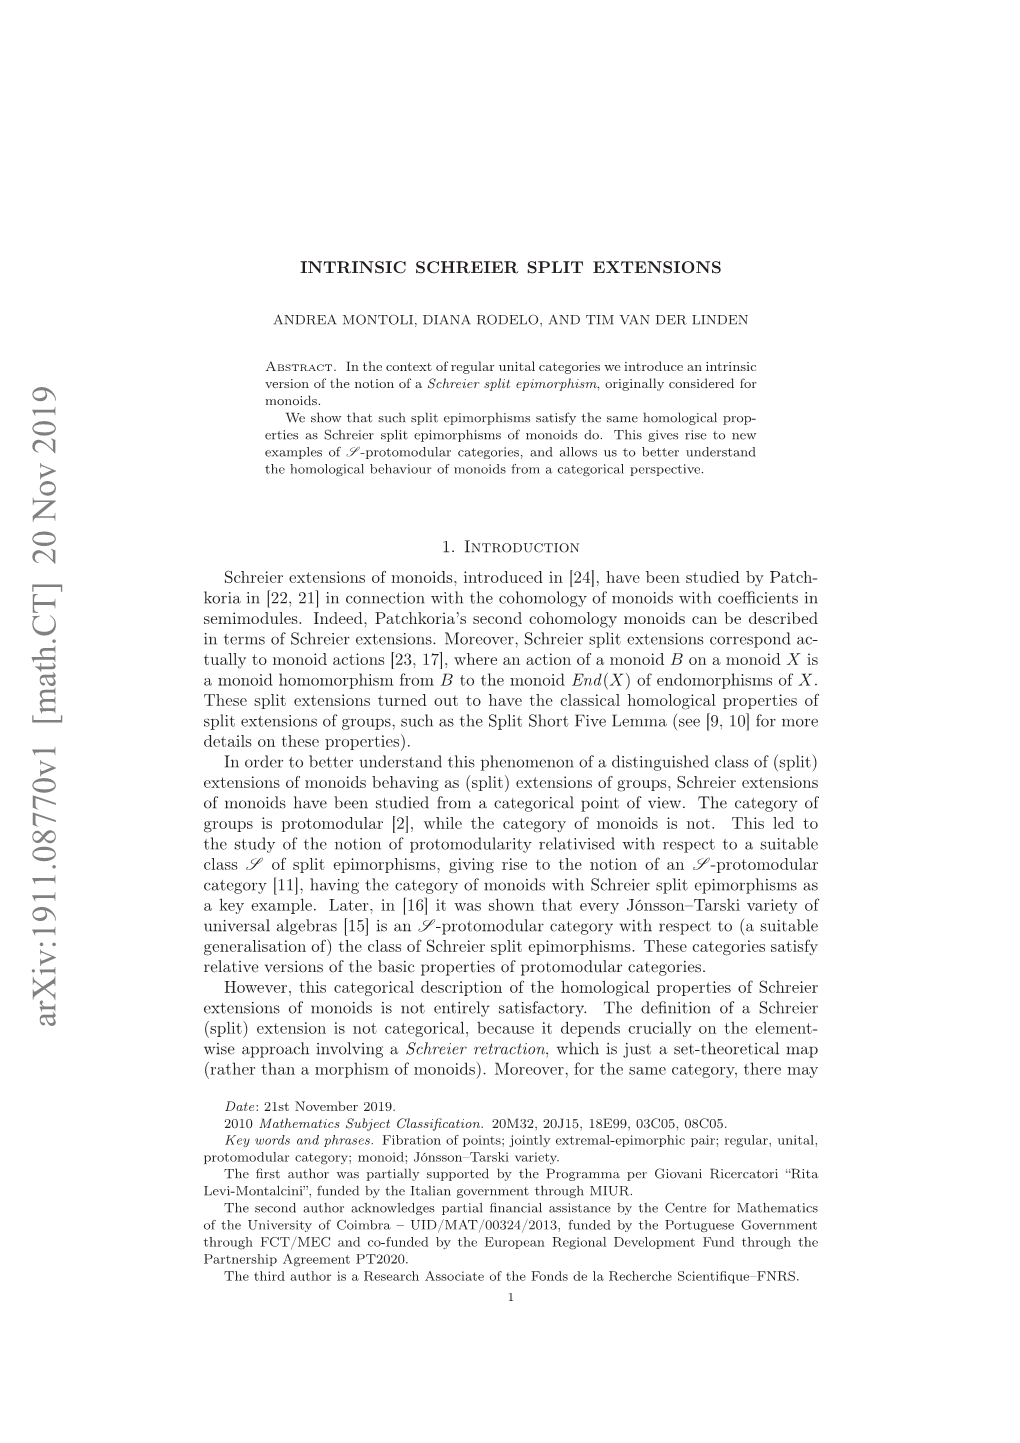 Intrinsic Schreier Split Extensions in This Section We Describe a Categorical Approach Towards Schreier Extensions